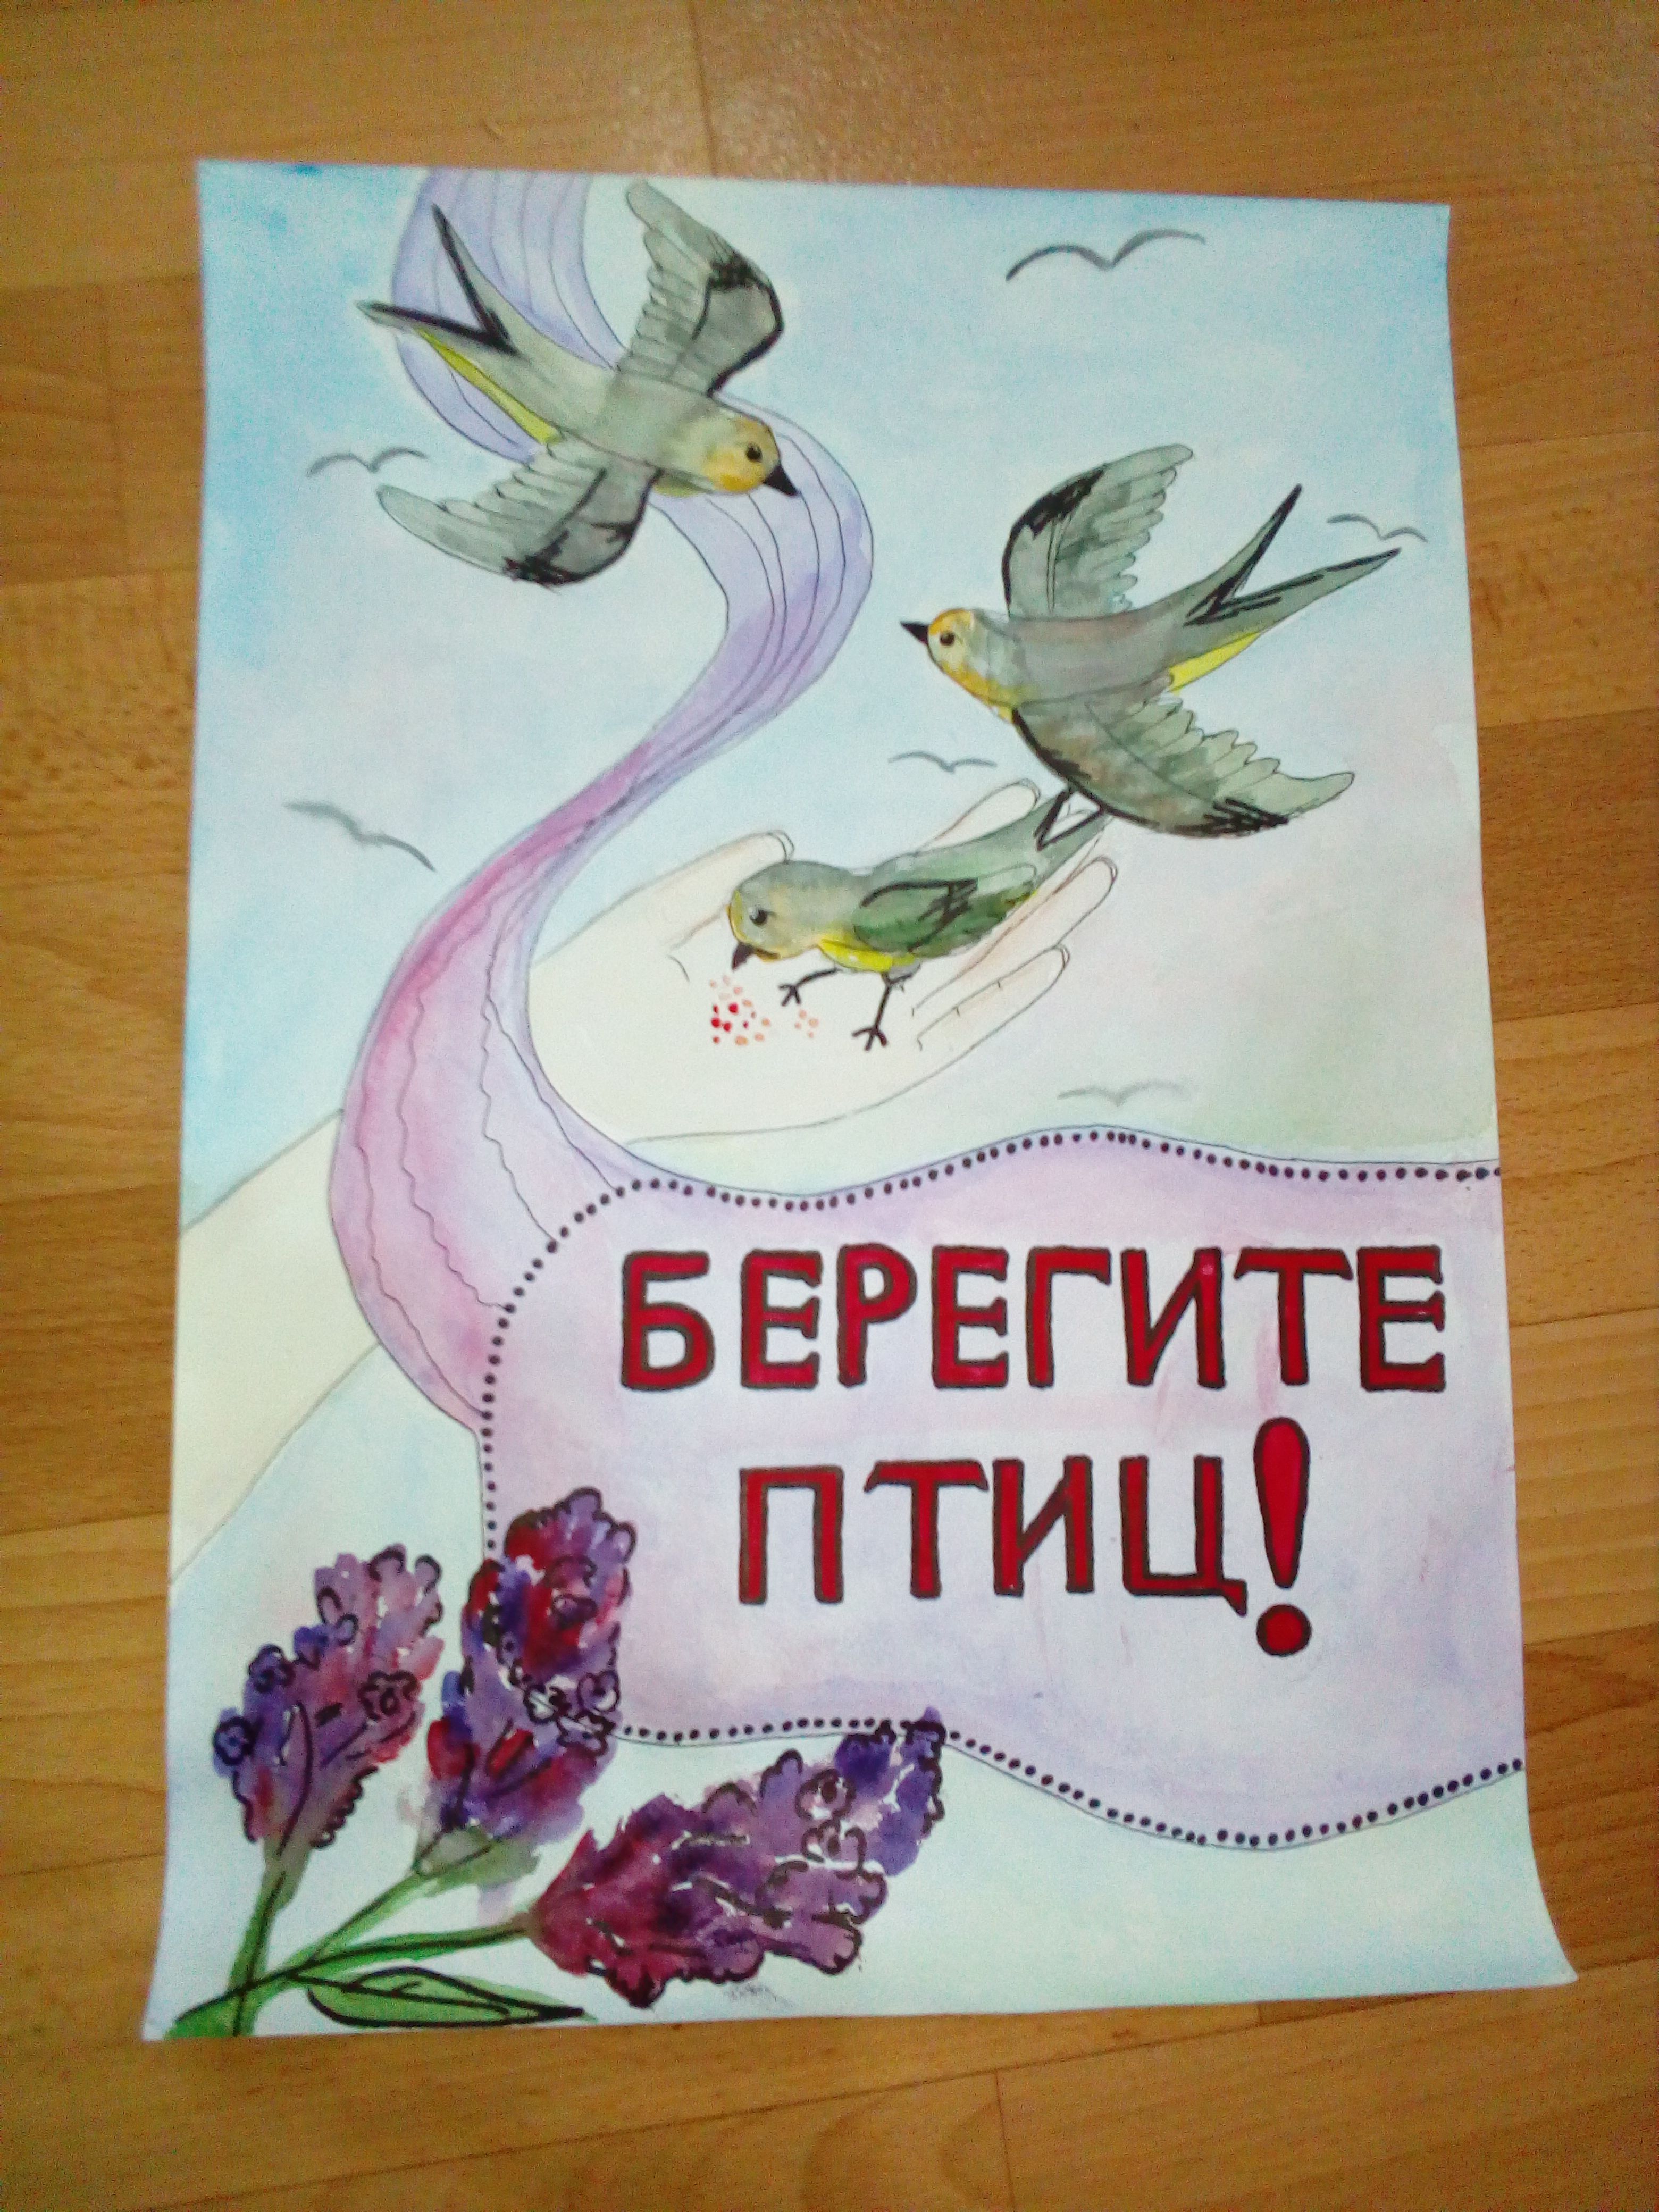 Берегите птиц картинки. Плакат берегите птиц. Плакат в защиту птиц. Плакат на тему берегите птиц. Берегите птиц рисунок.